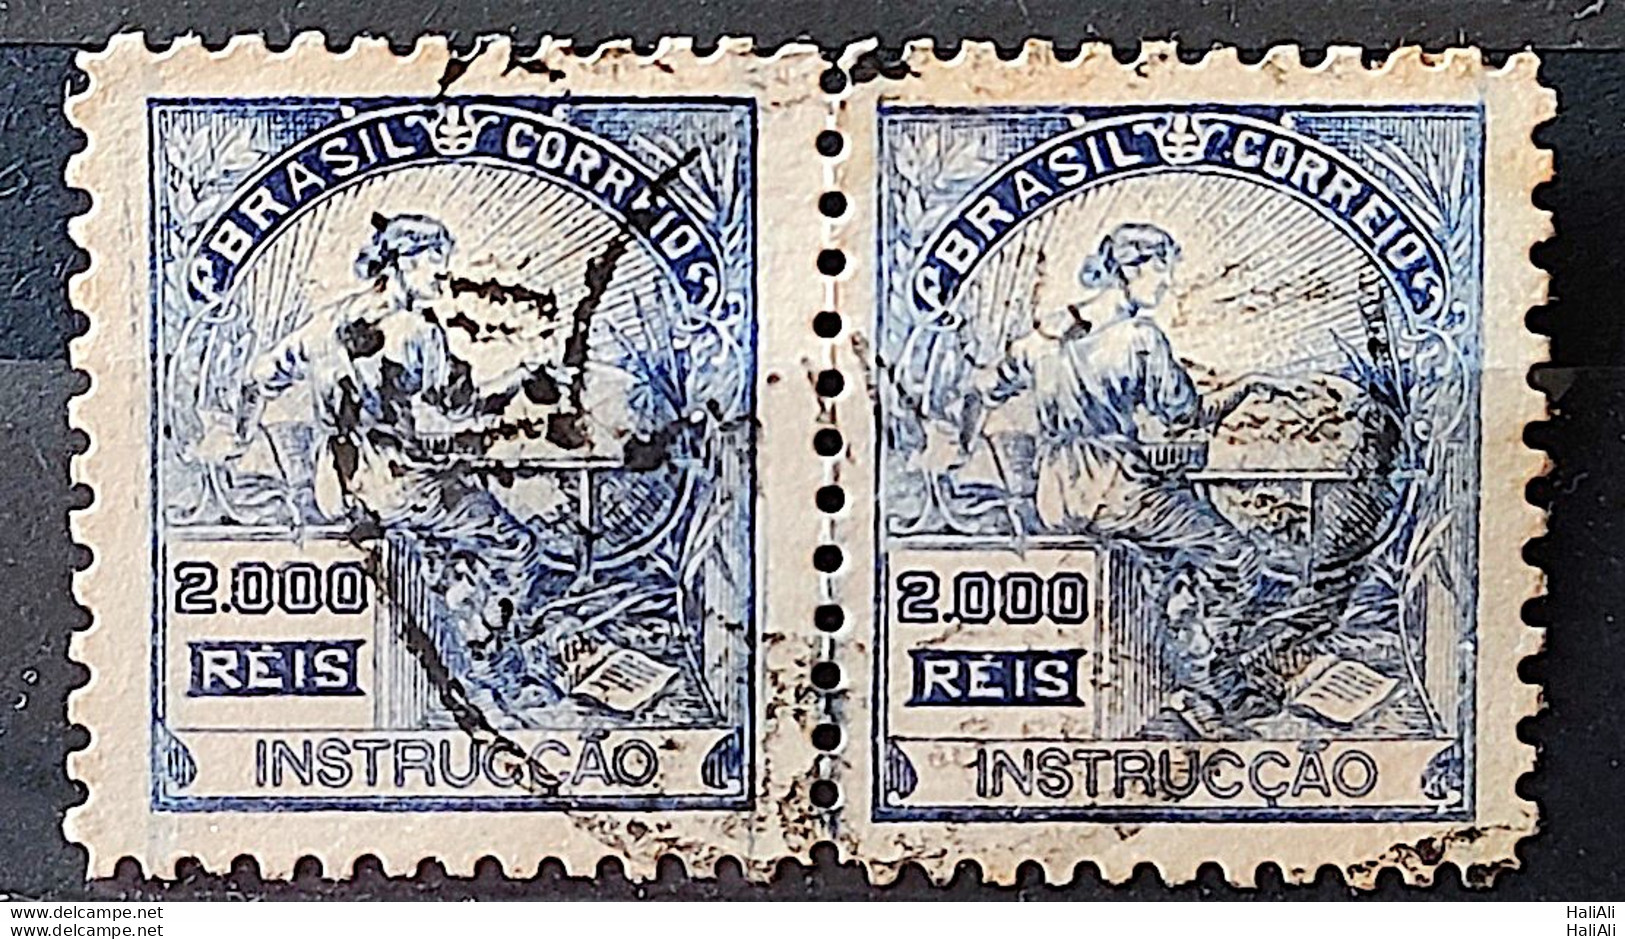 Brazil Regular Stamp Cod RHM 294 Grandpa Instruction 2000 Reis Filigree L 1934 Par Circulated - Usati